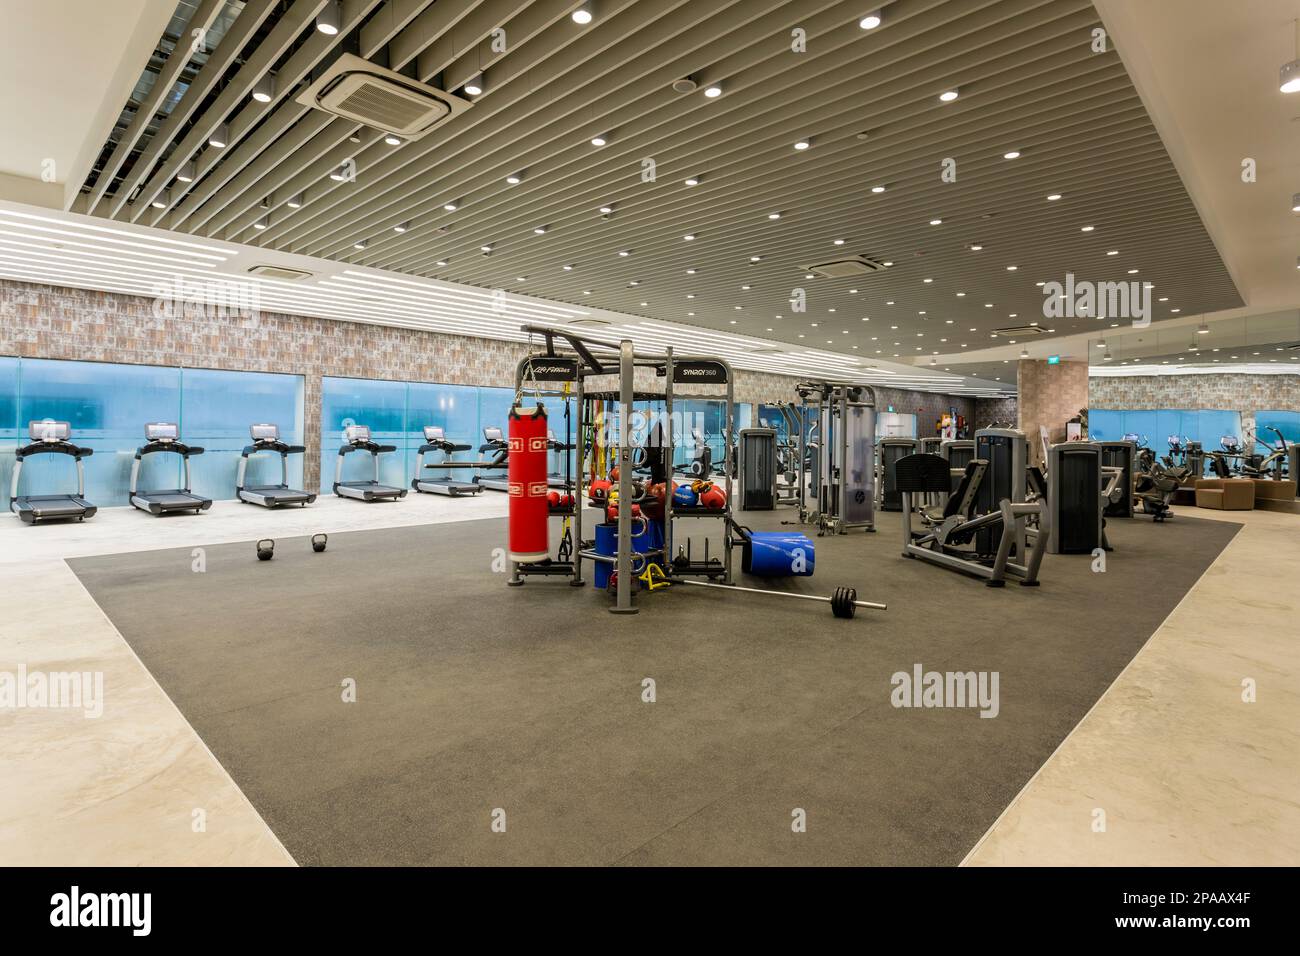 Hanoi, Vietnam - January 28, 2018: Fitness center health club gym and exercise equipment in a luxury development Park City located in Hanoi, Vietnam. Stock Photo